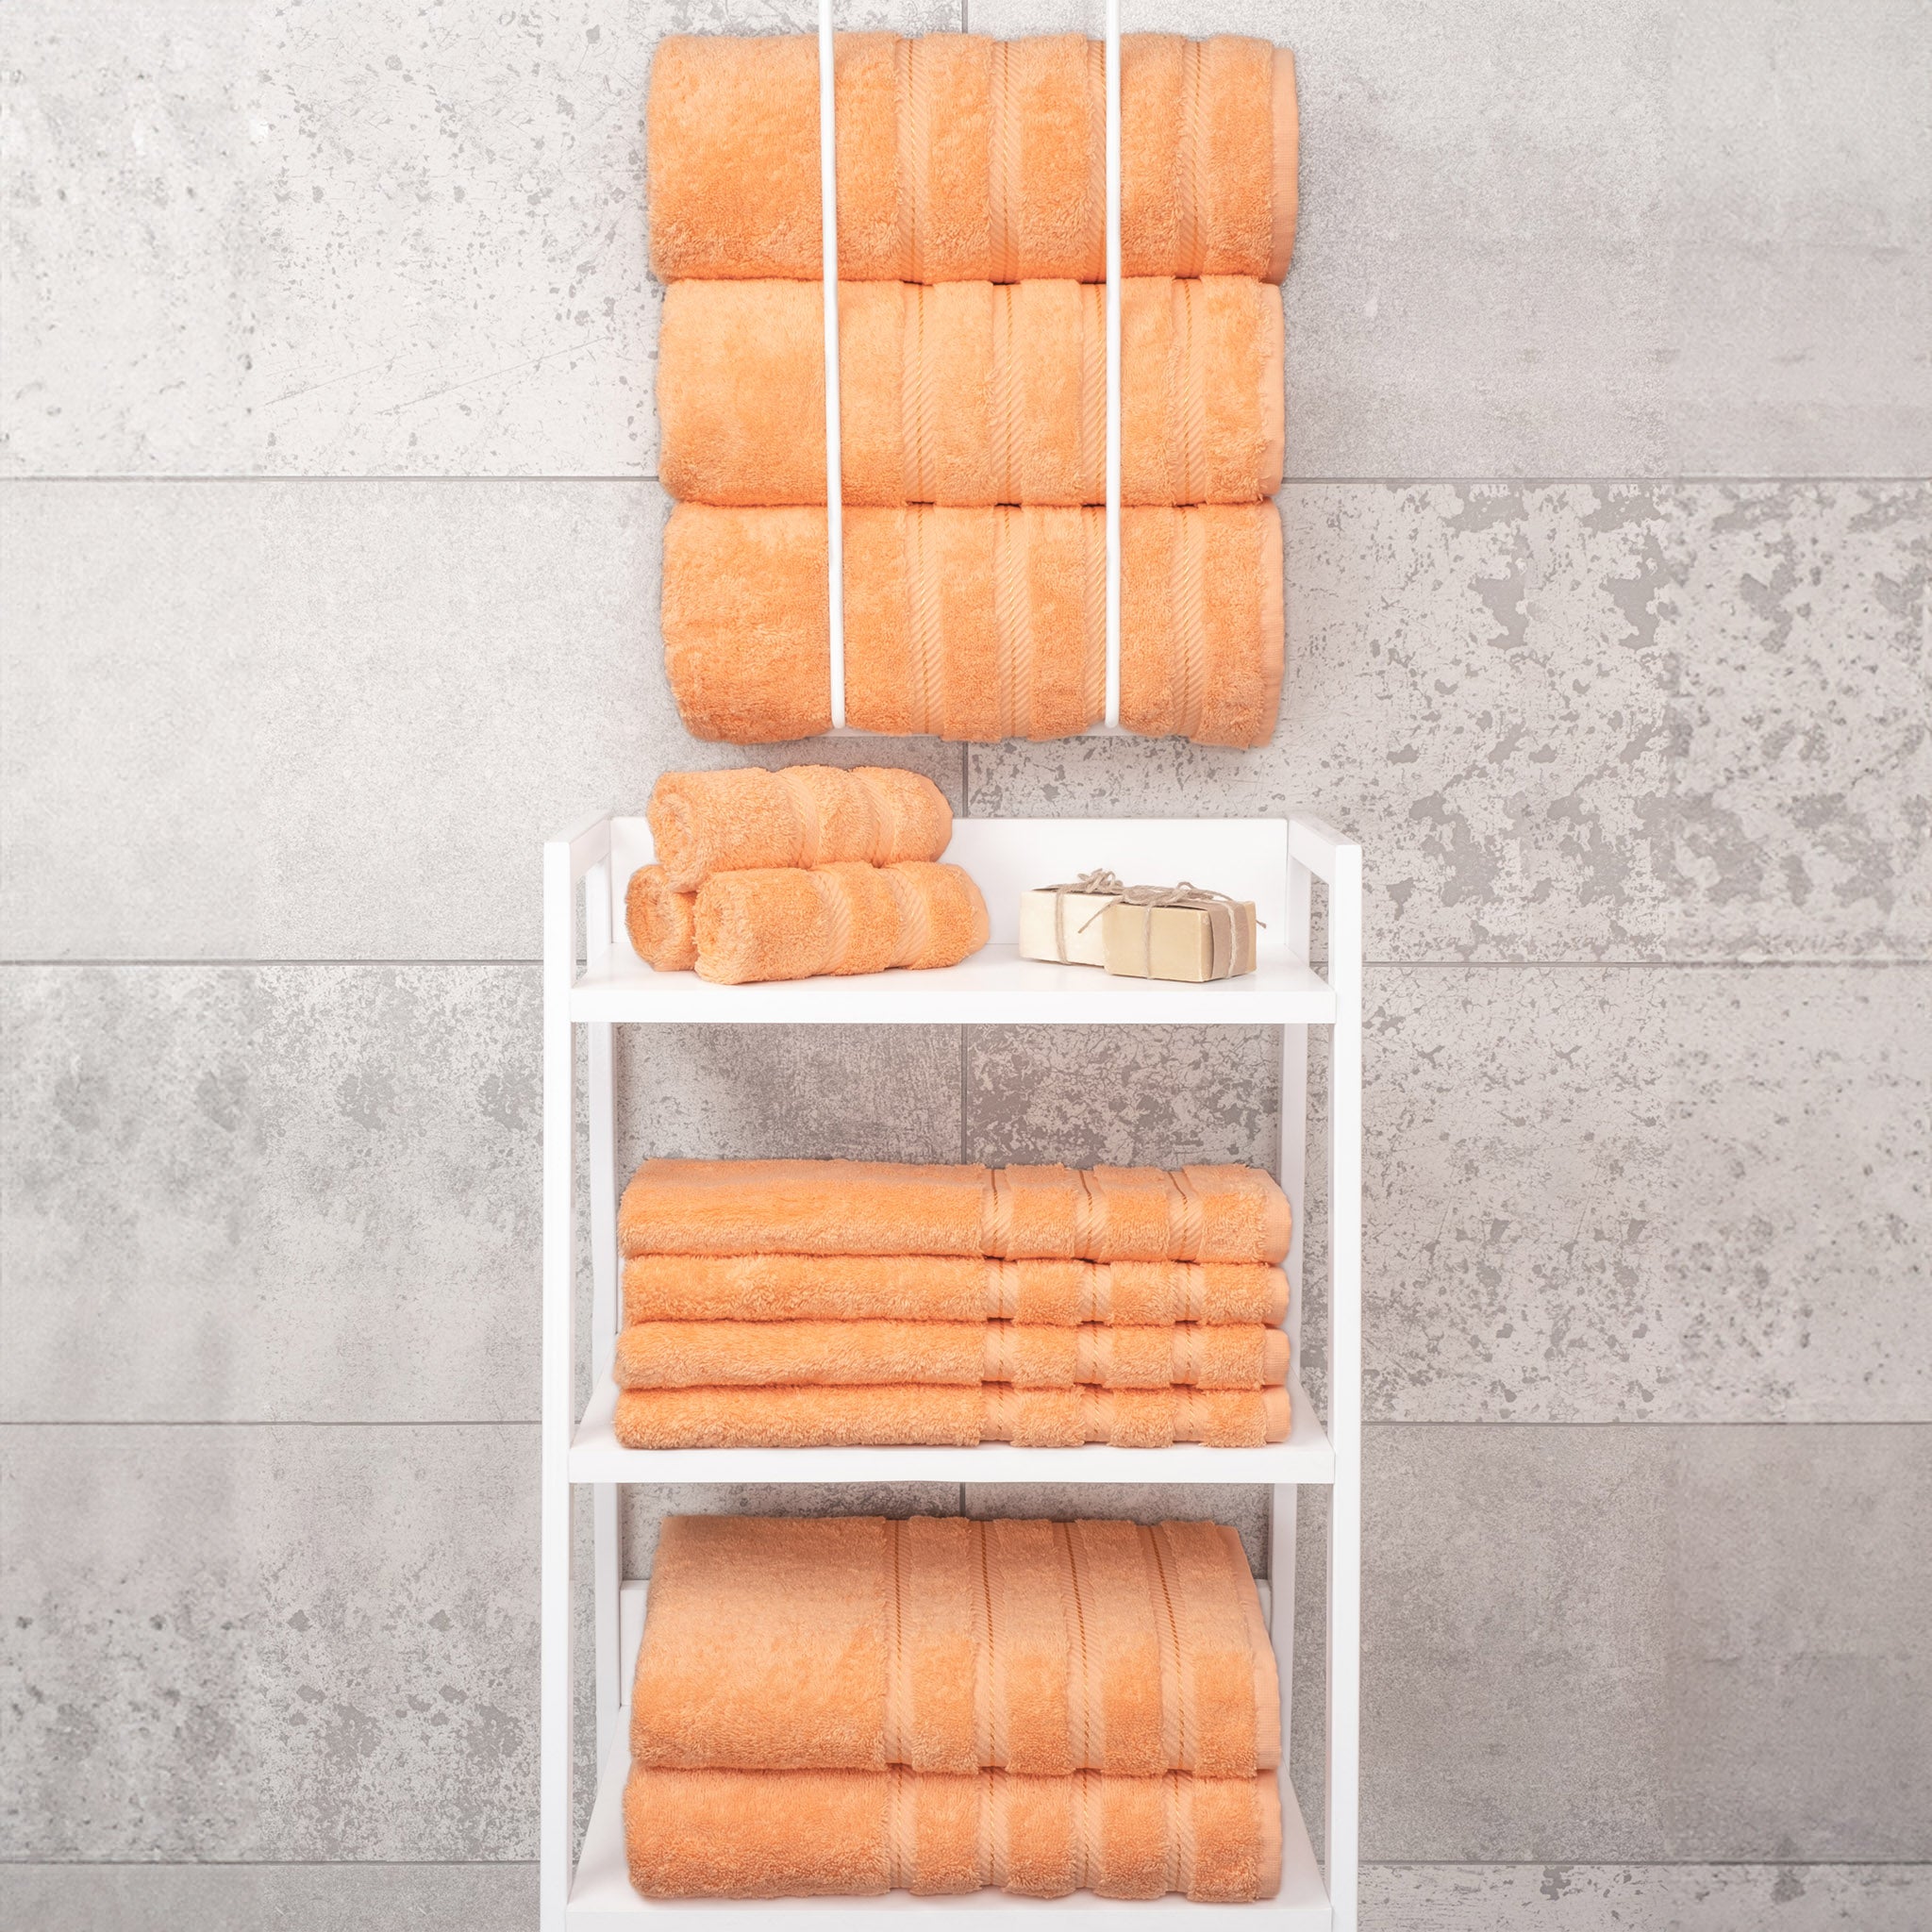 American Soft Linen 100% Turkish Cotton 4 Pack Bath Towel Set Wholesale malibu-peach-7